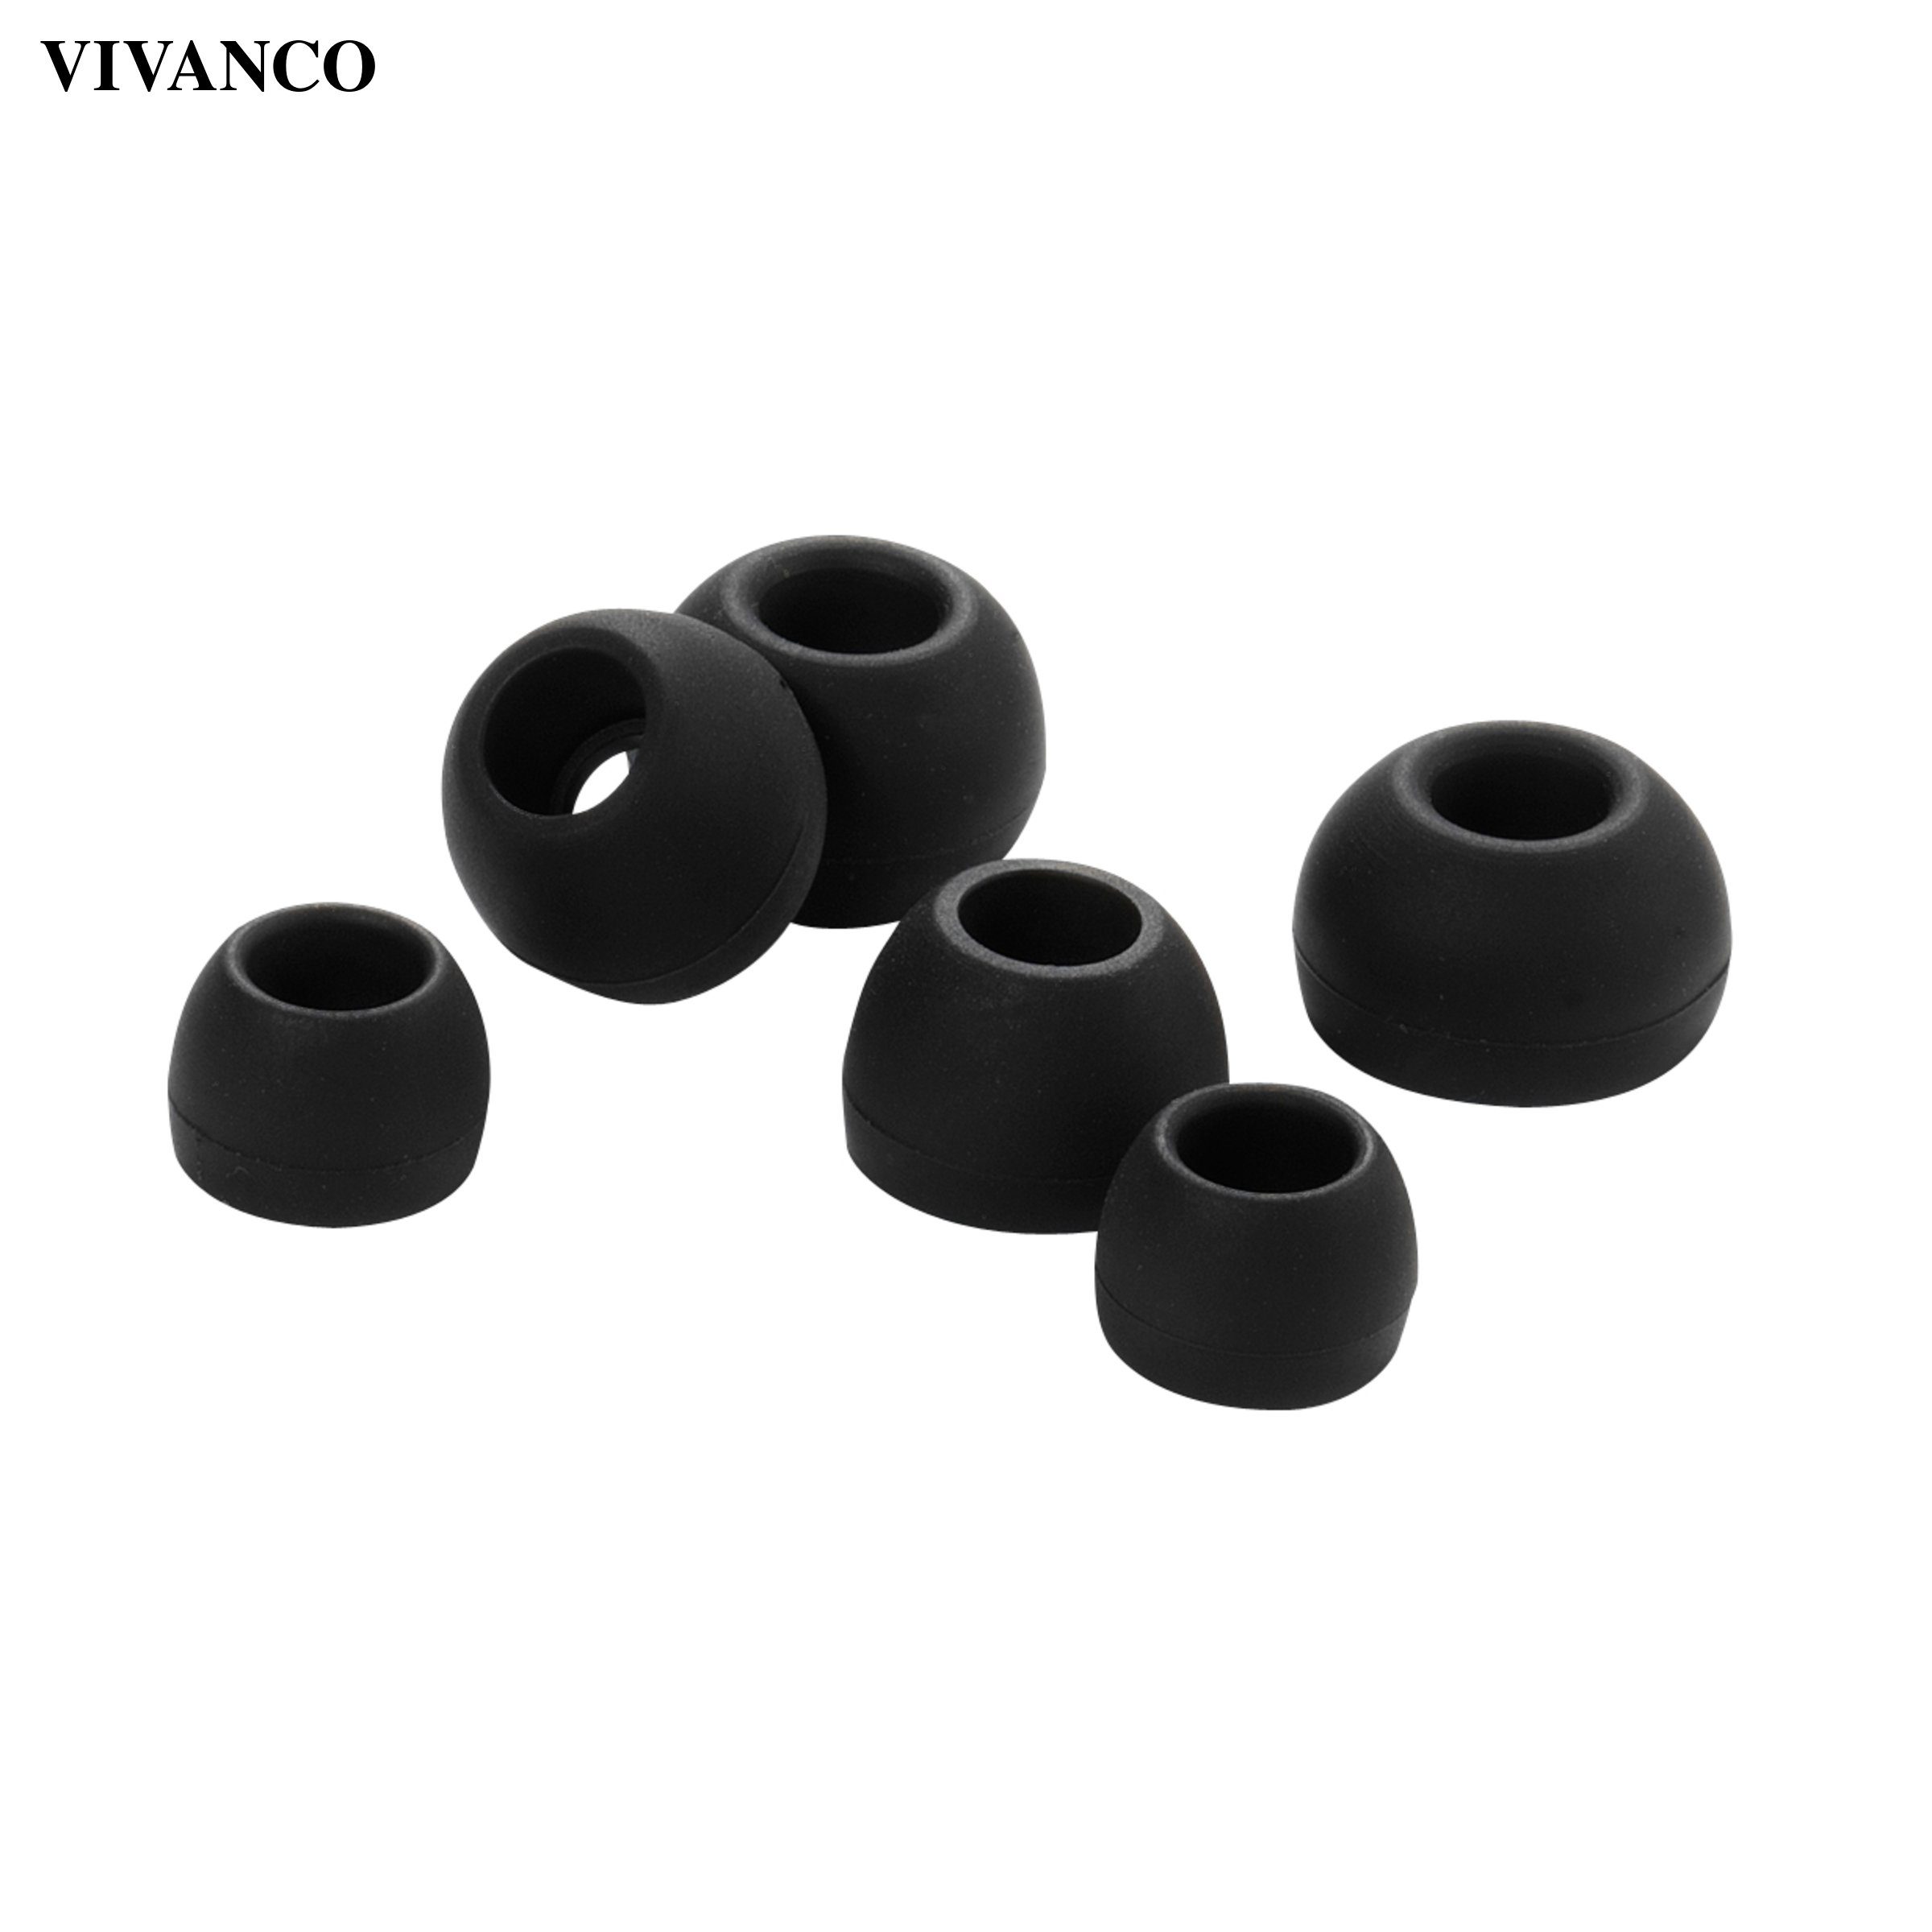 Vivanco Kopfhörer (Verschiedene Größen S / M / L) | Kopfhörer